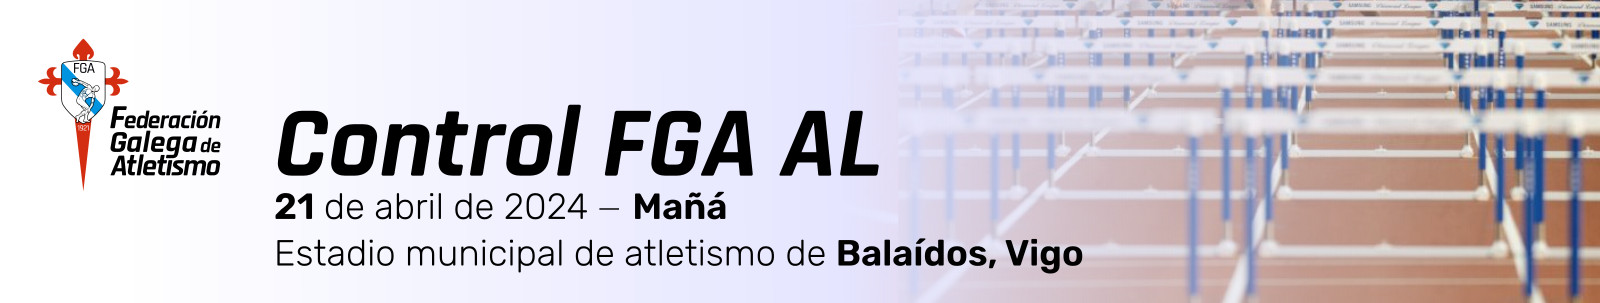  Control FGA AL - Vigo - 21/04/2024 - Mañá.  Estadio Municipal de Atletismo de Balaídos, 21 abril 2024